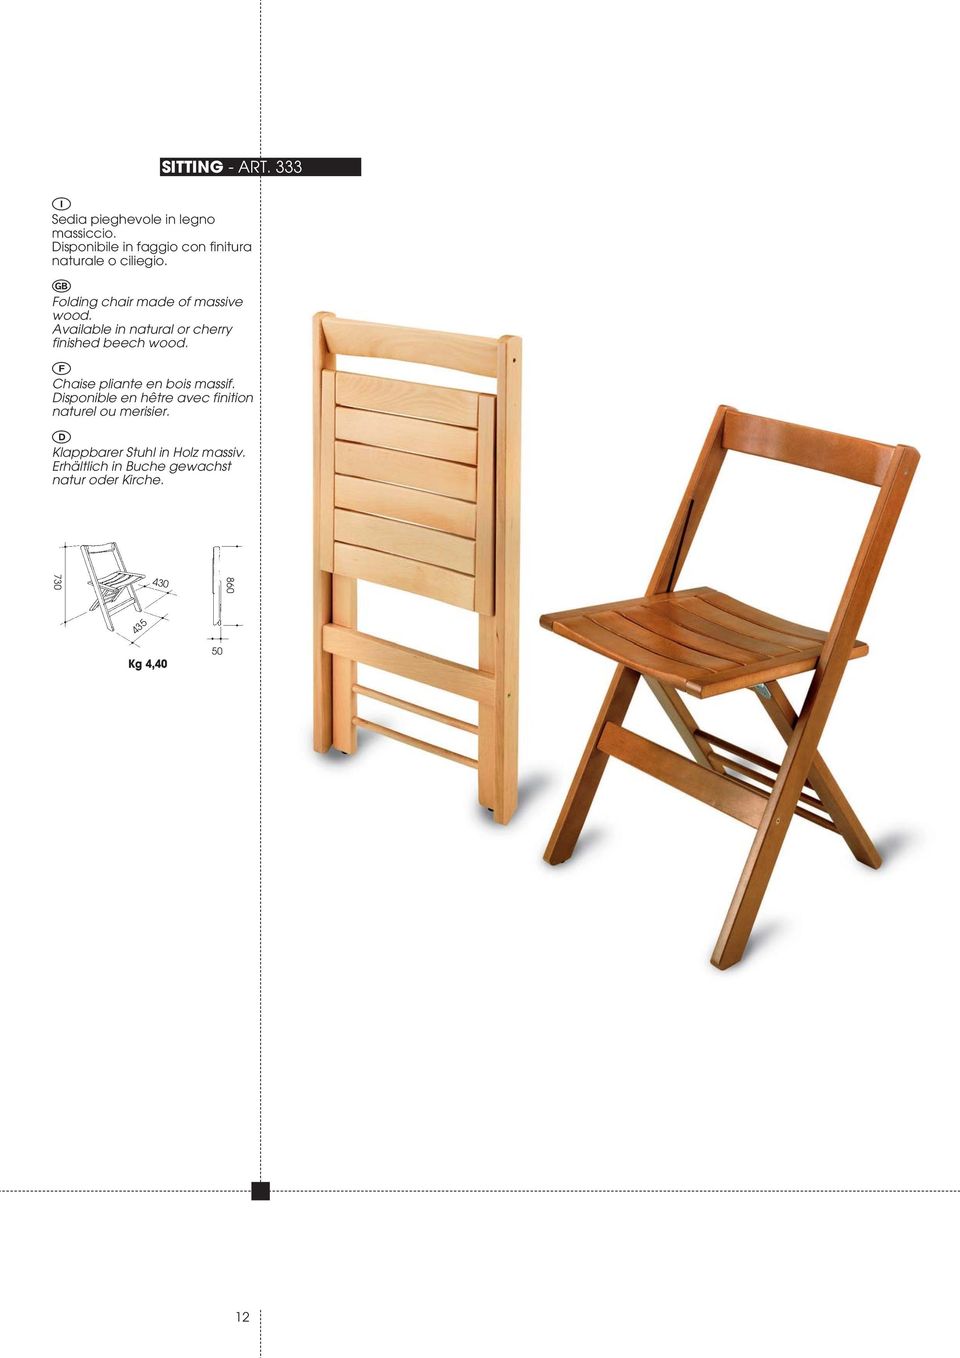 Folding chair made of massive wood.